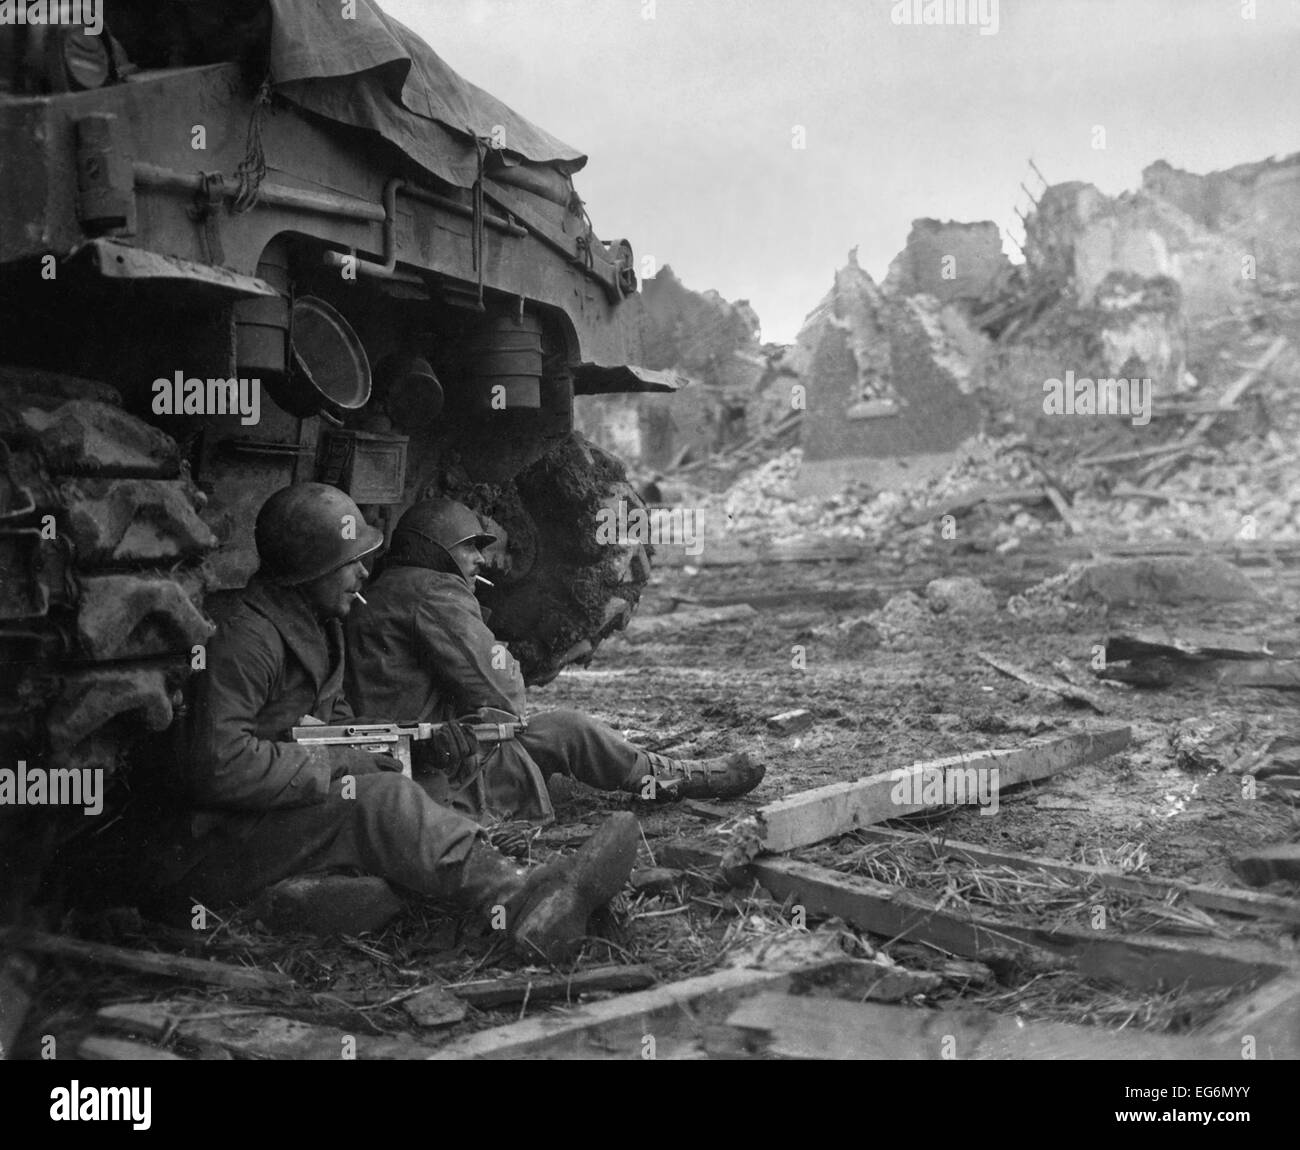 U.S. Infantrymen sheltering behind a M-4 Sherman tank during heavy German shelling. Dec. 11, 1944. Geich, Germany. World War 2. Stock Photo